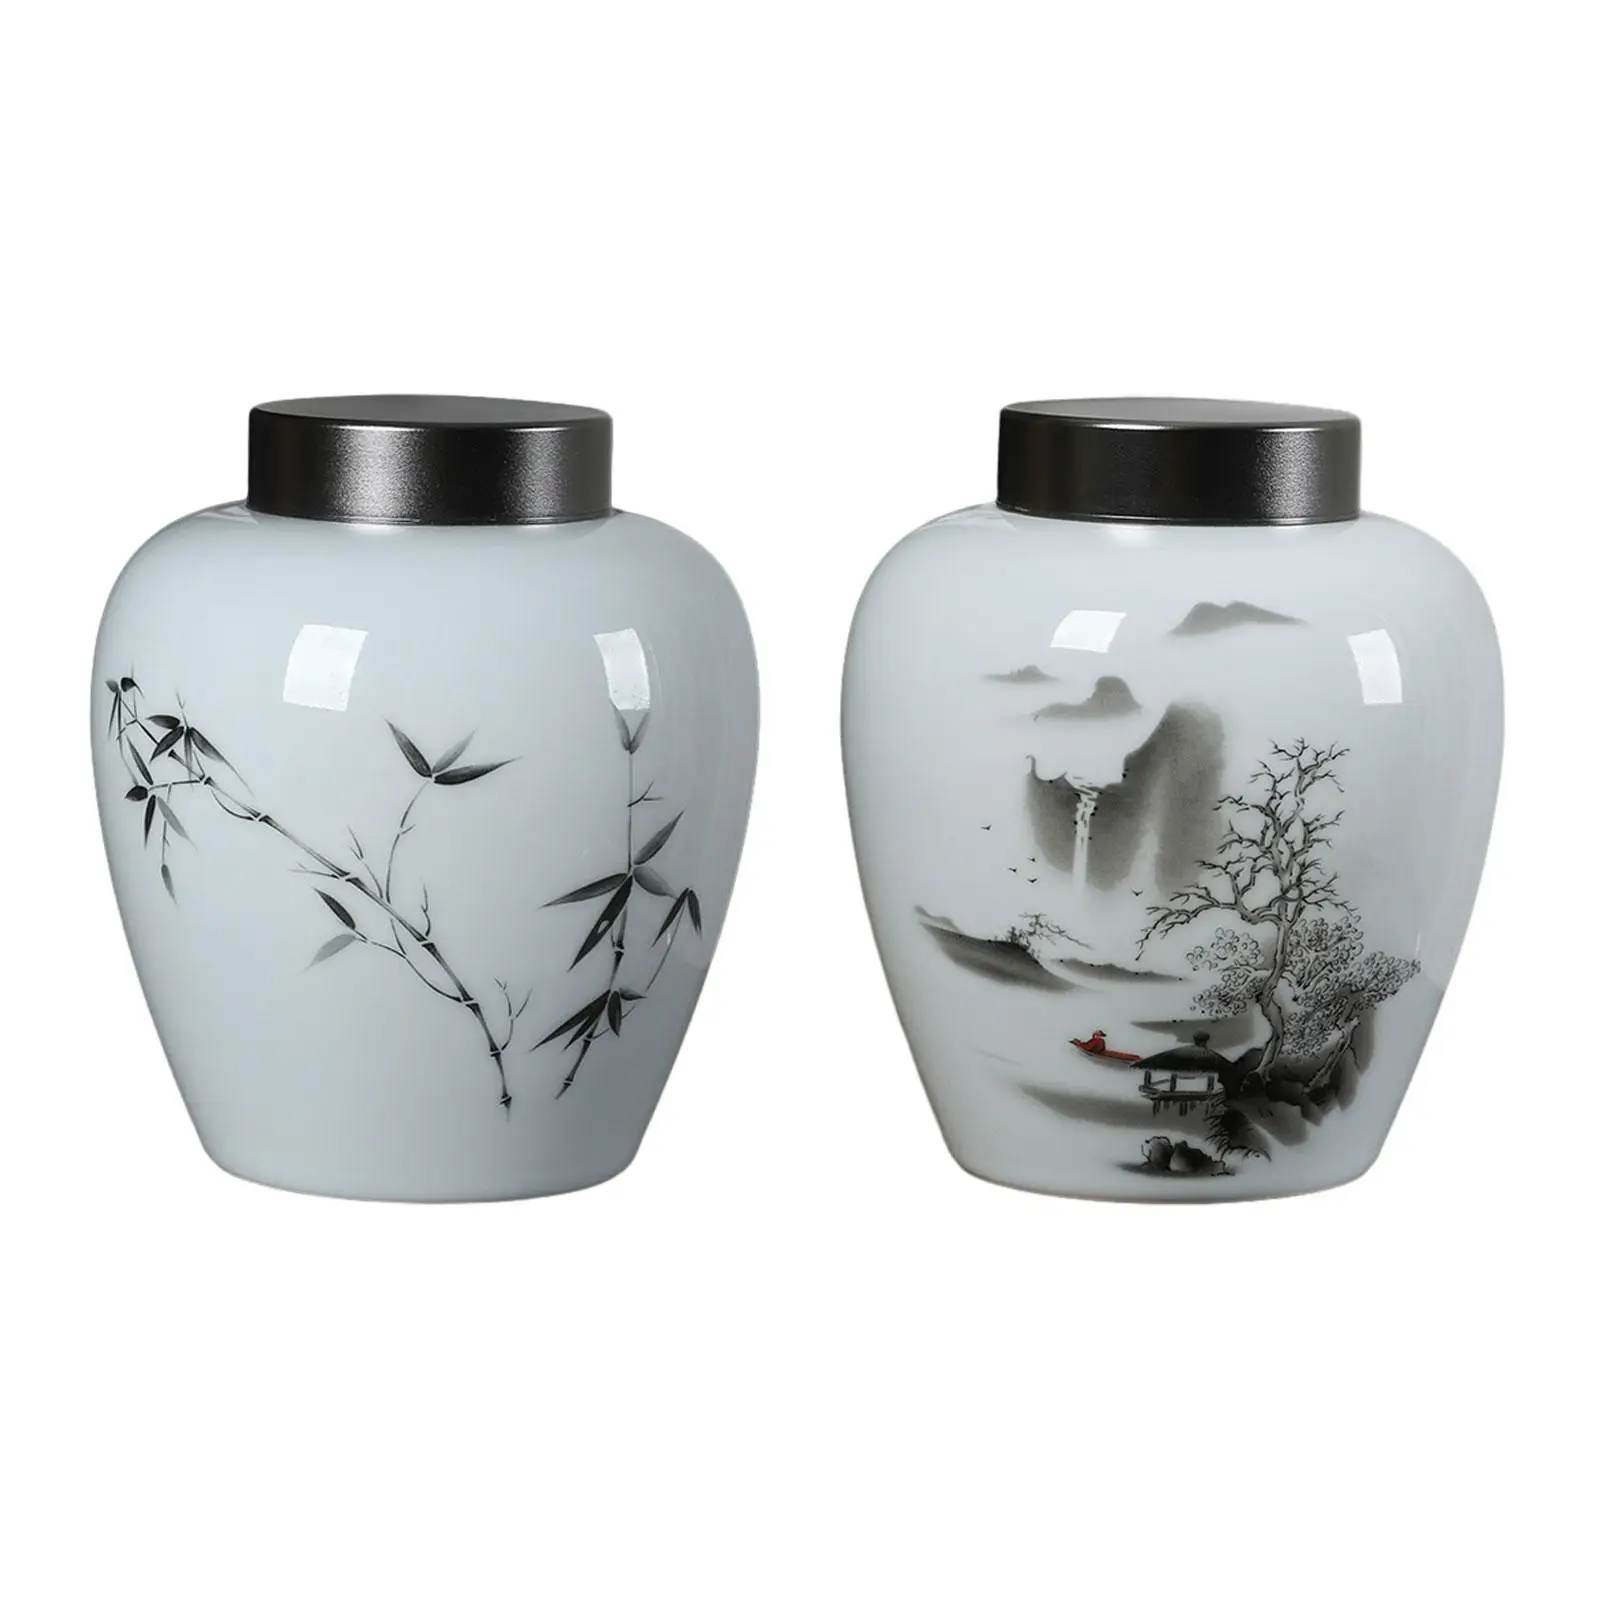 Porcelain Tea Canister Delicate Temple Jar Tea Vase Ceramic Ginger Jar for Home Party Living Room Table Centerpiece Decoration